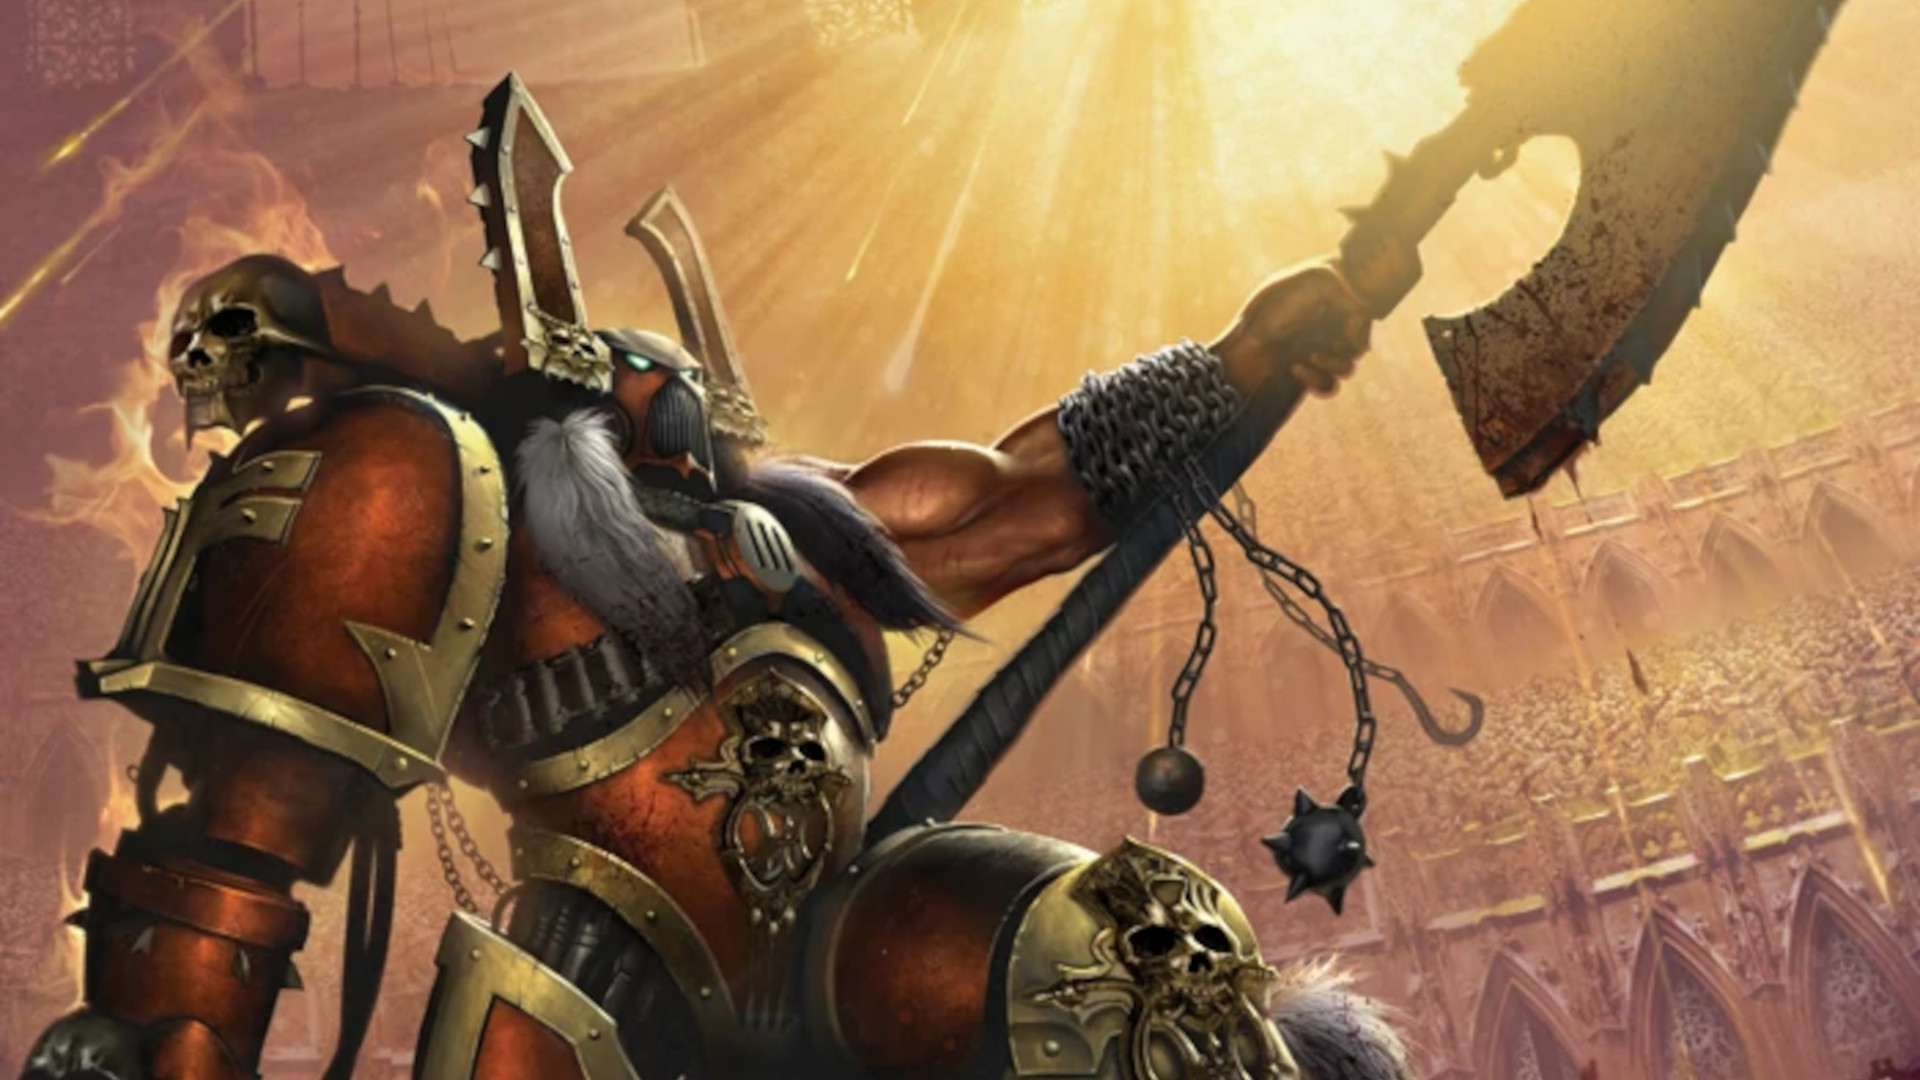 Games Workshop art of Warhammer 40k Kharn the Betrayer posing triumphantly with an axe